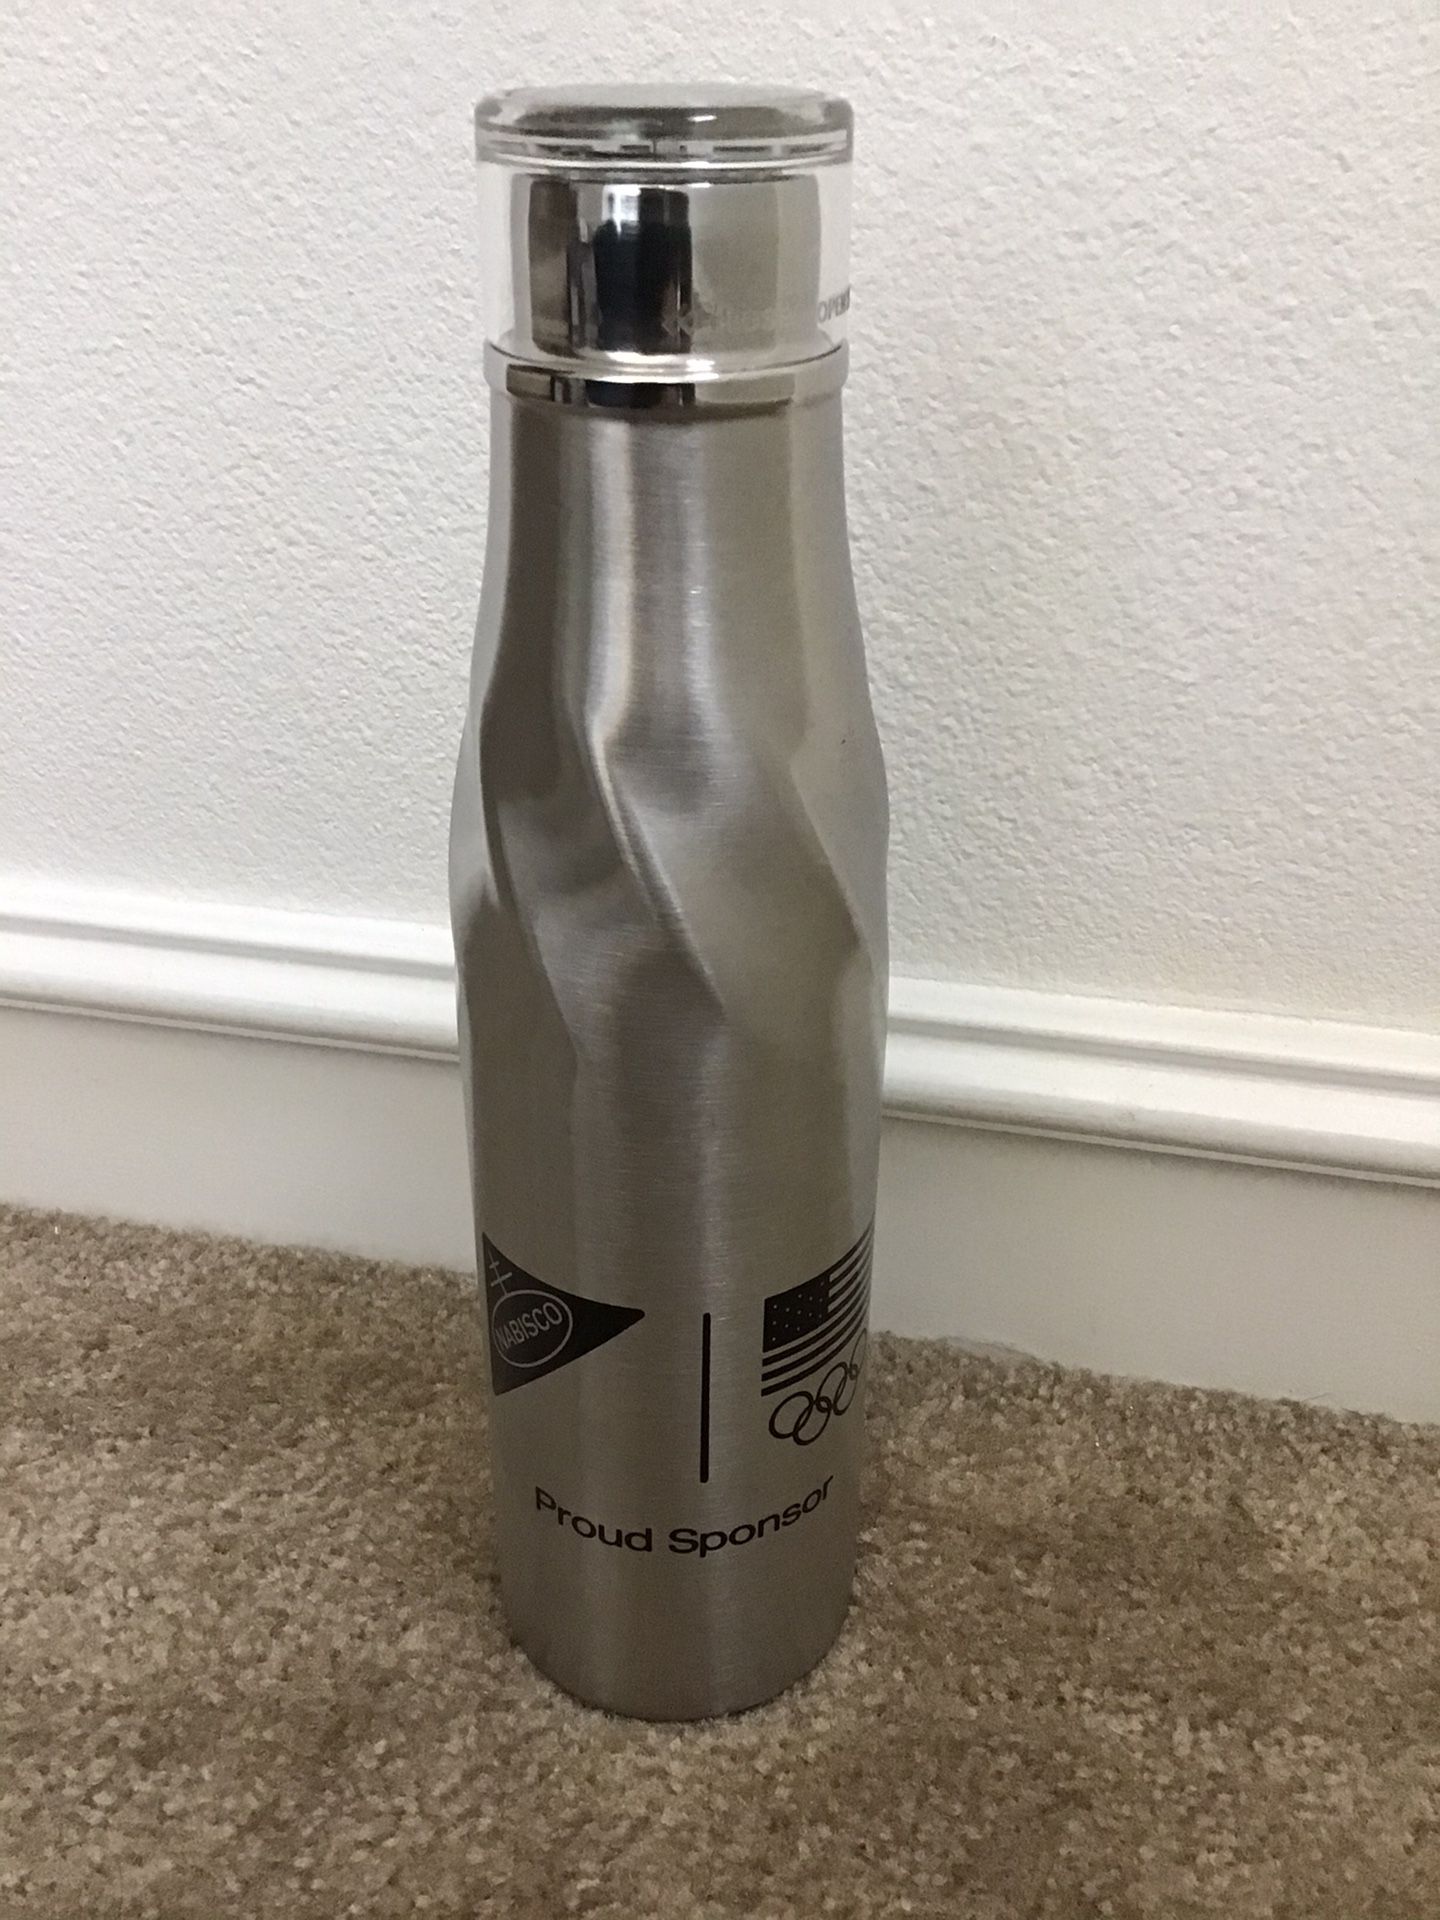 Nabisco Team USA Proud Sponsor Water Bottle Brand New